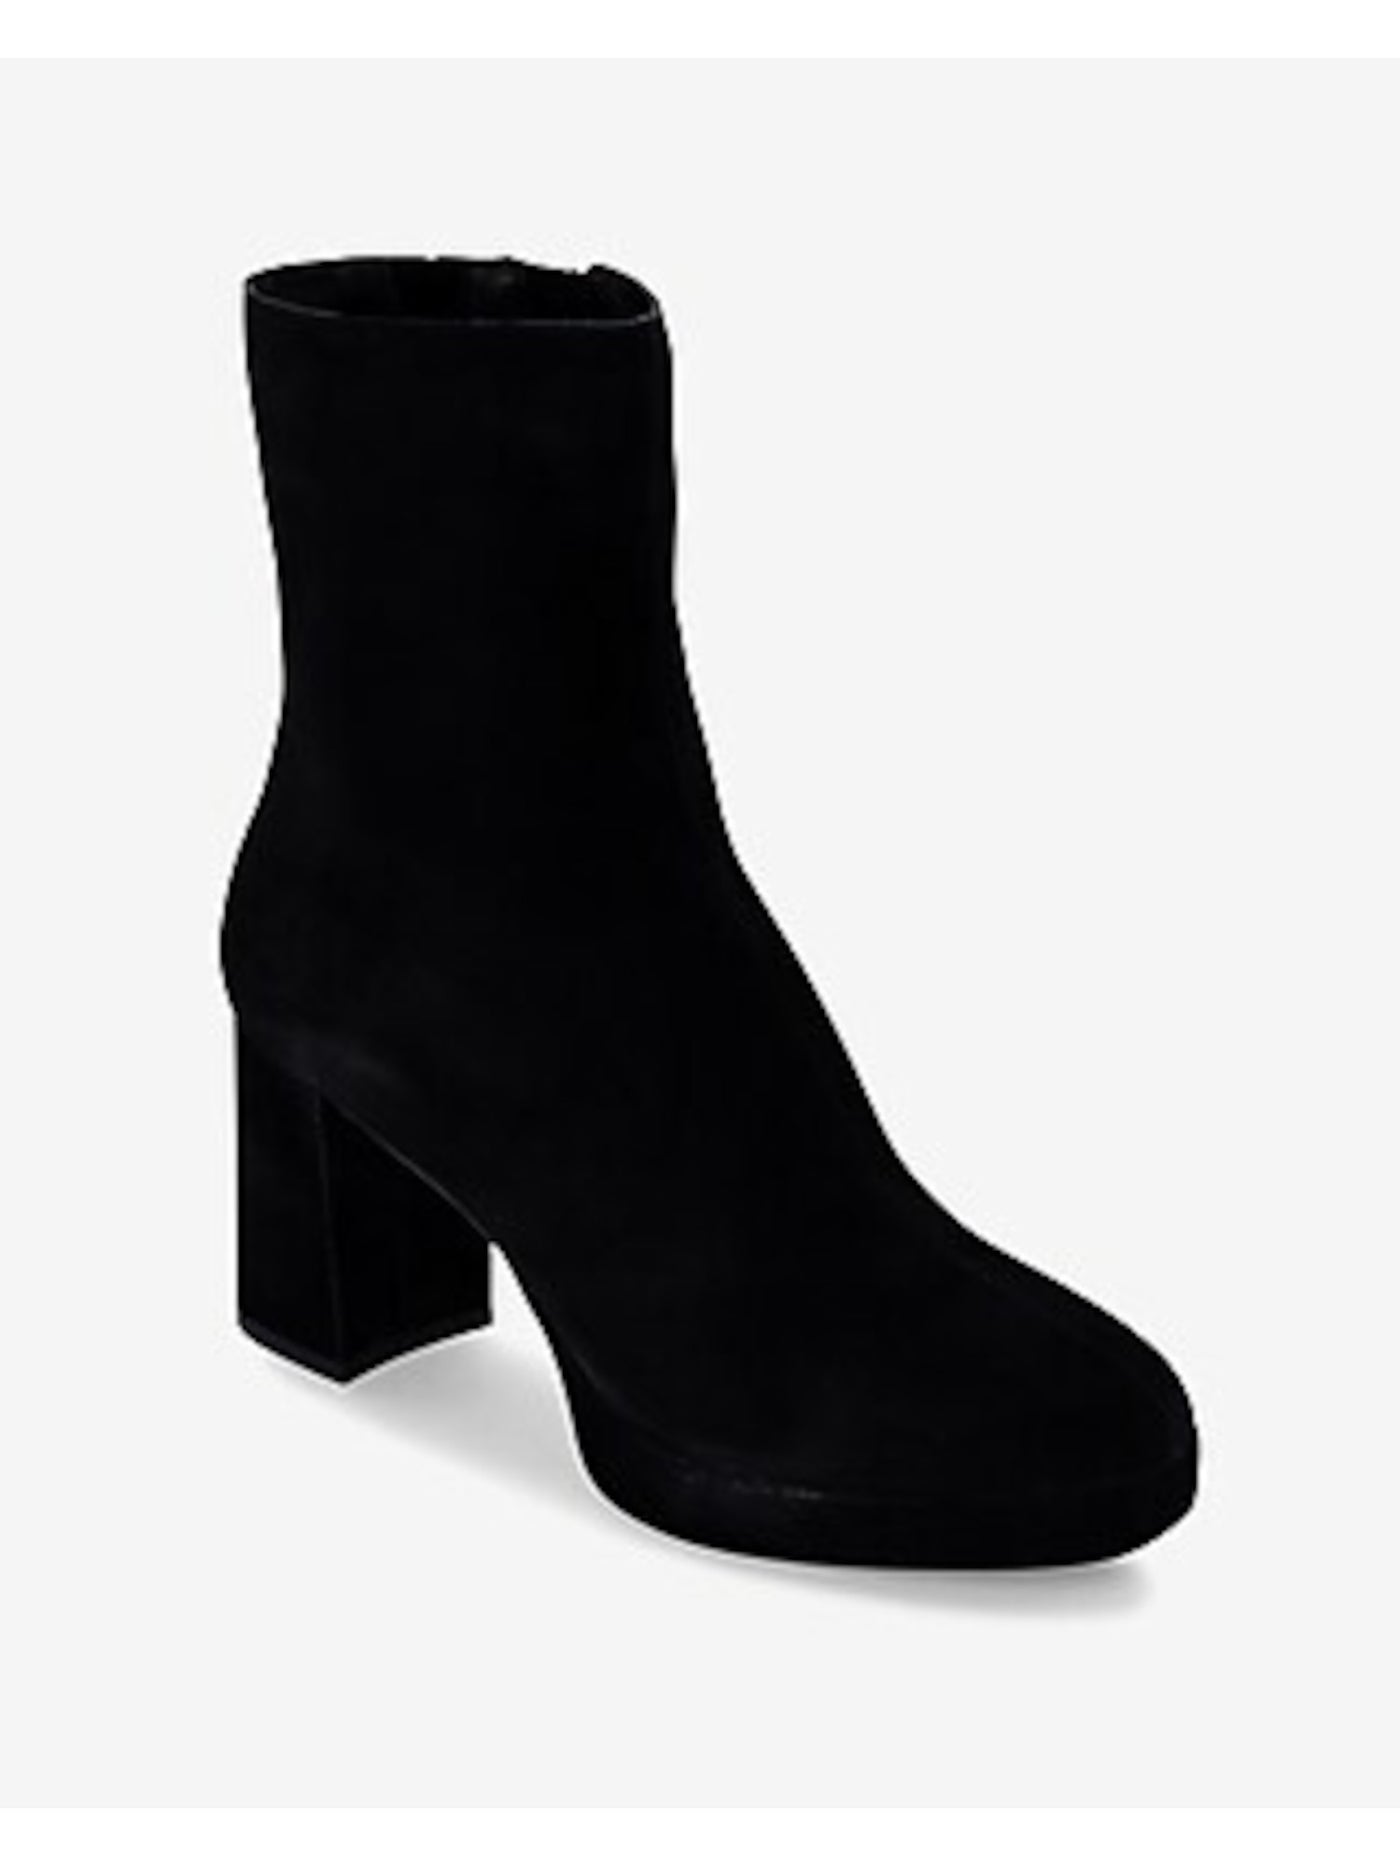 DOLCE VITA Womens Black Padded Goring Eden Square Toe Block Heel Zip-Up Leather Booties 6